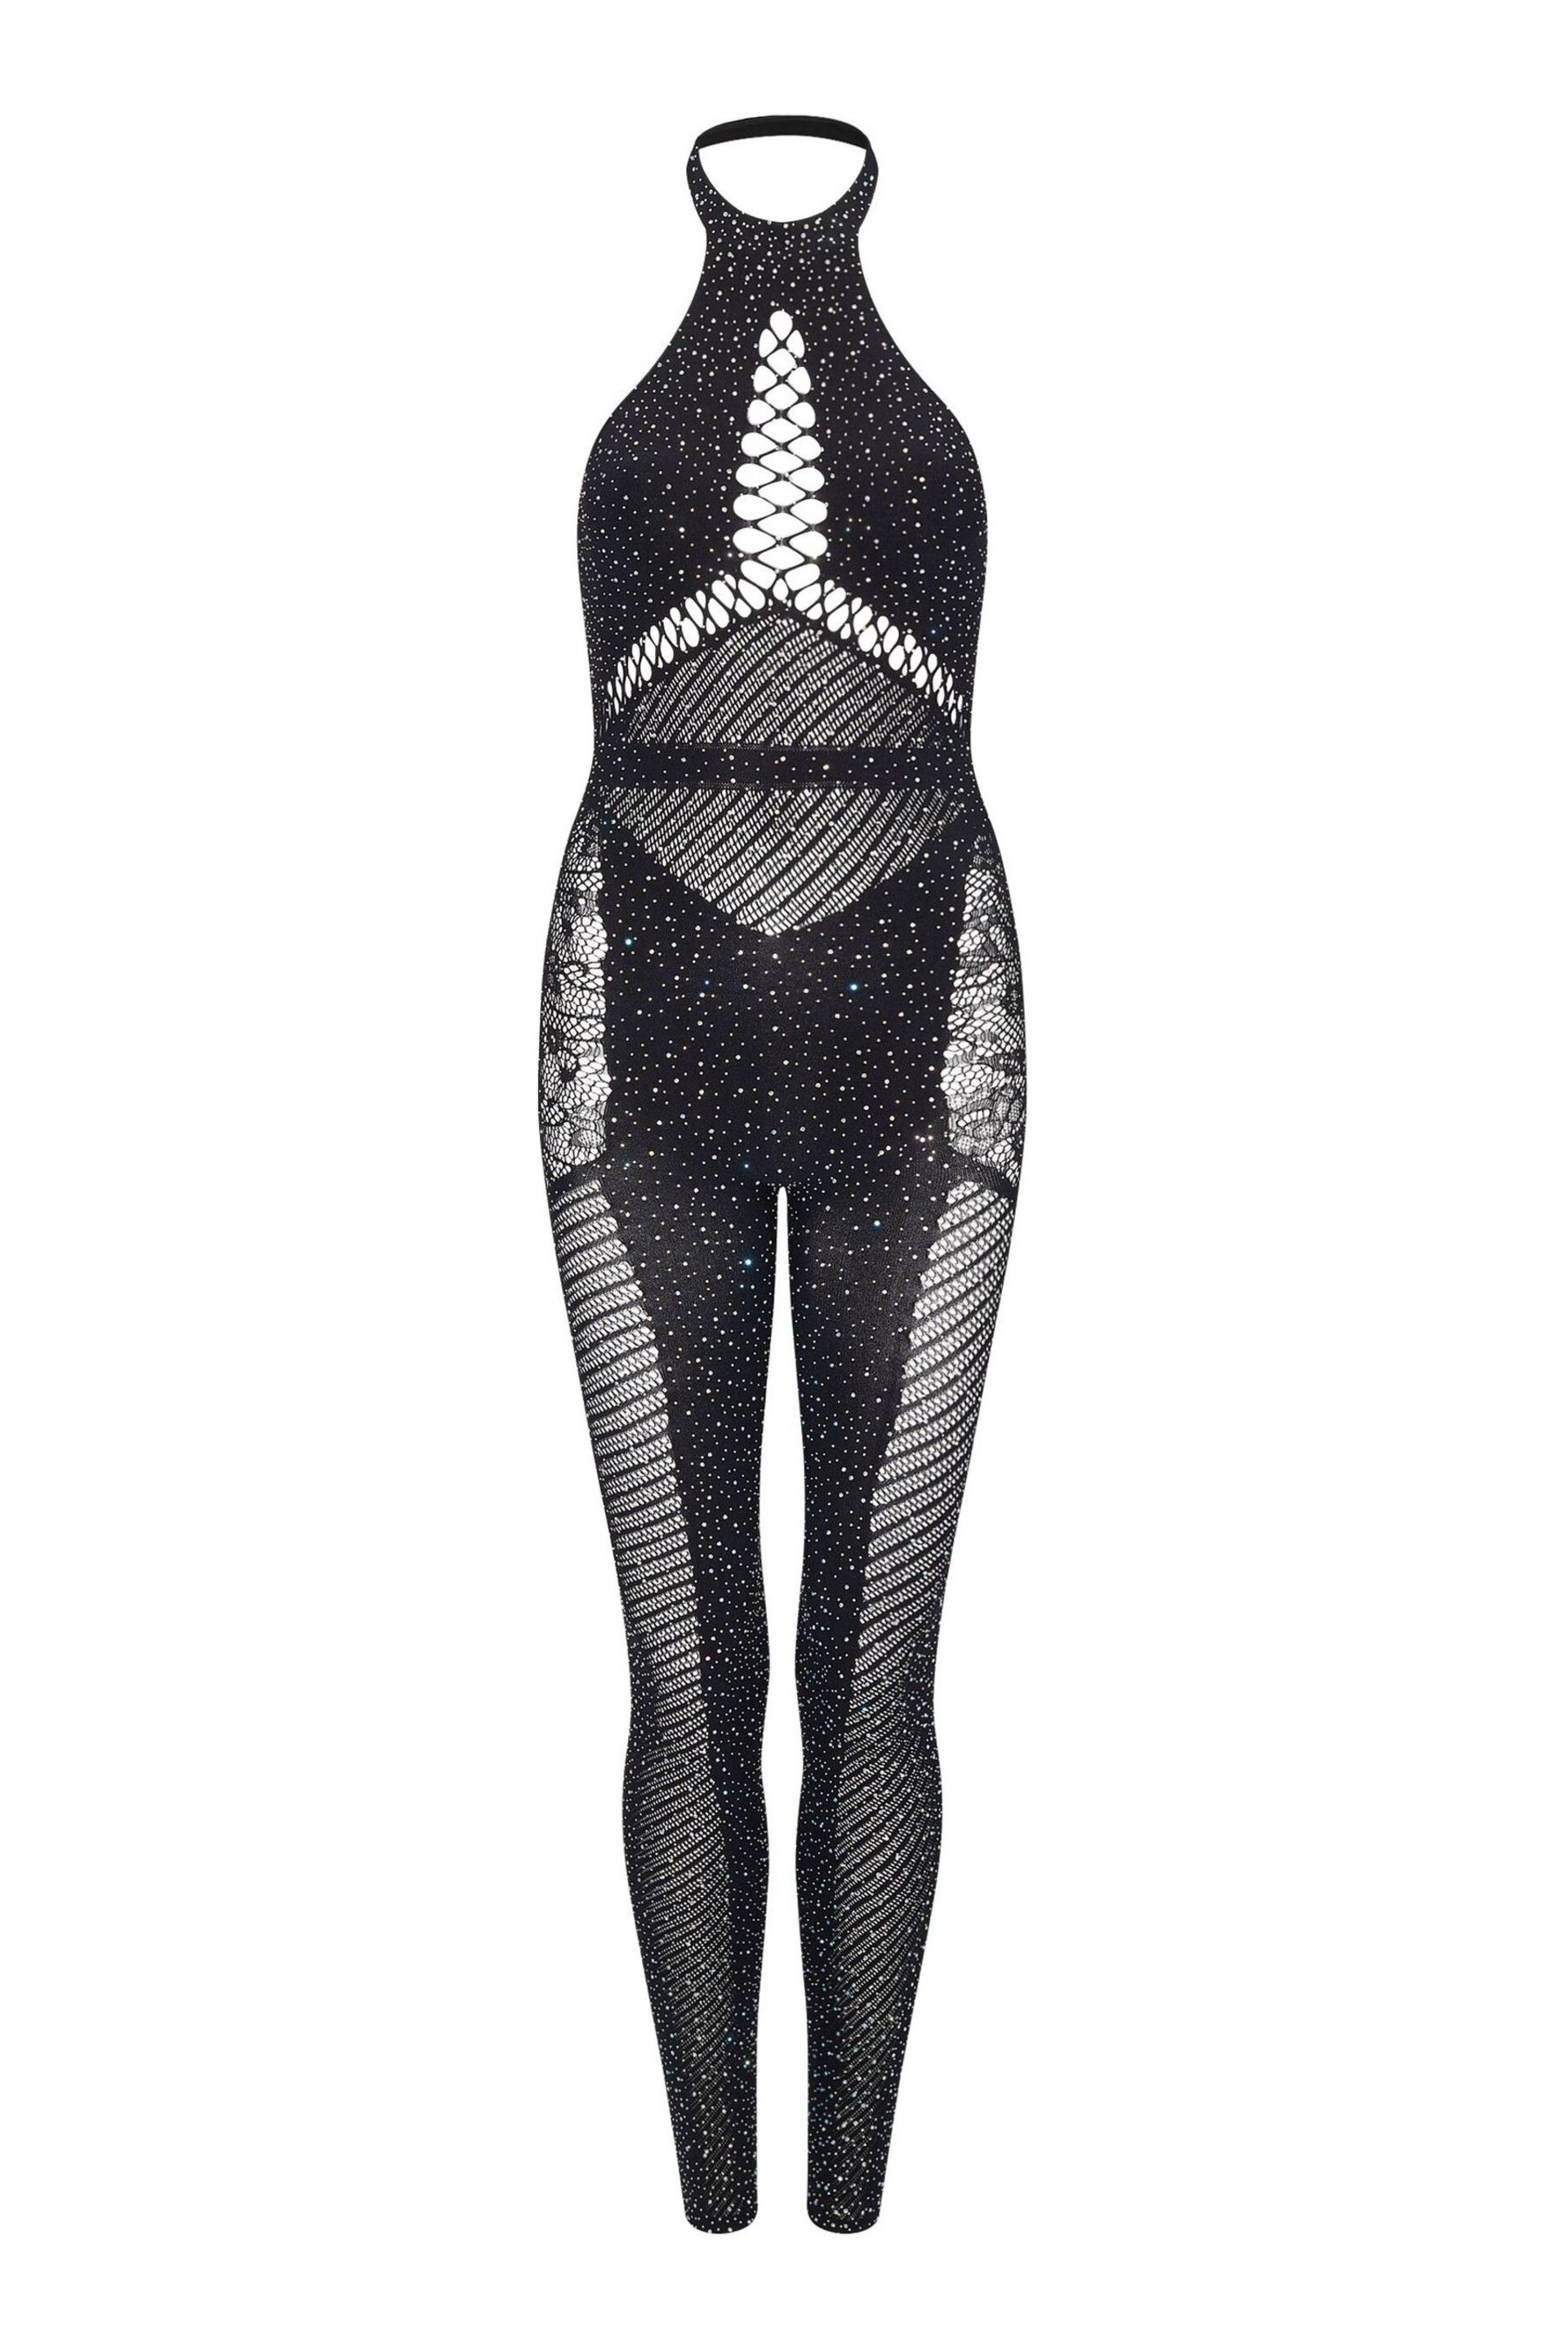 Ann Summers Black Paisley Diamanté Bodystocking - Image 4 of 4